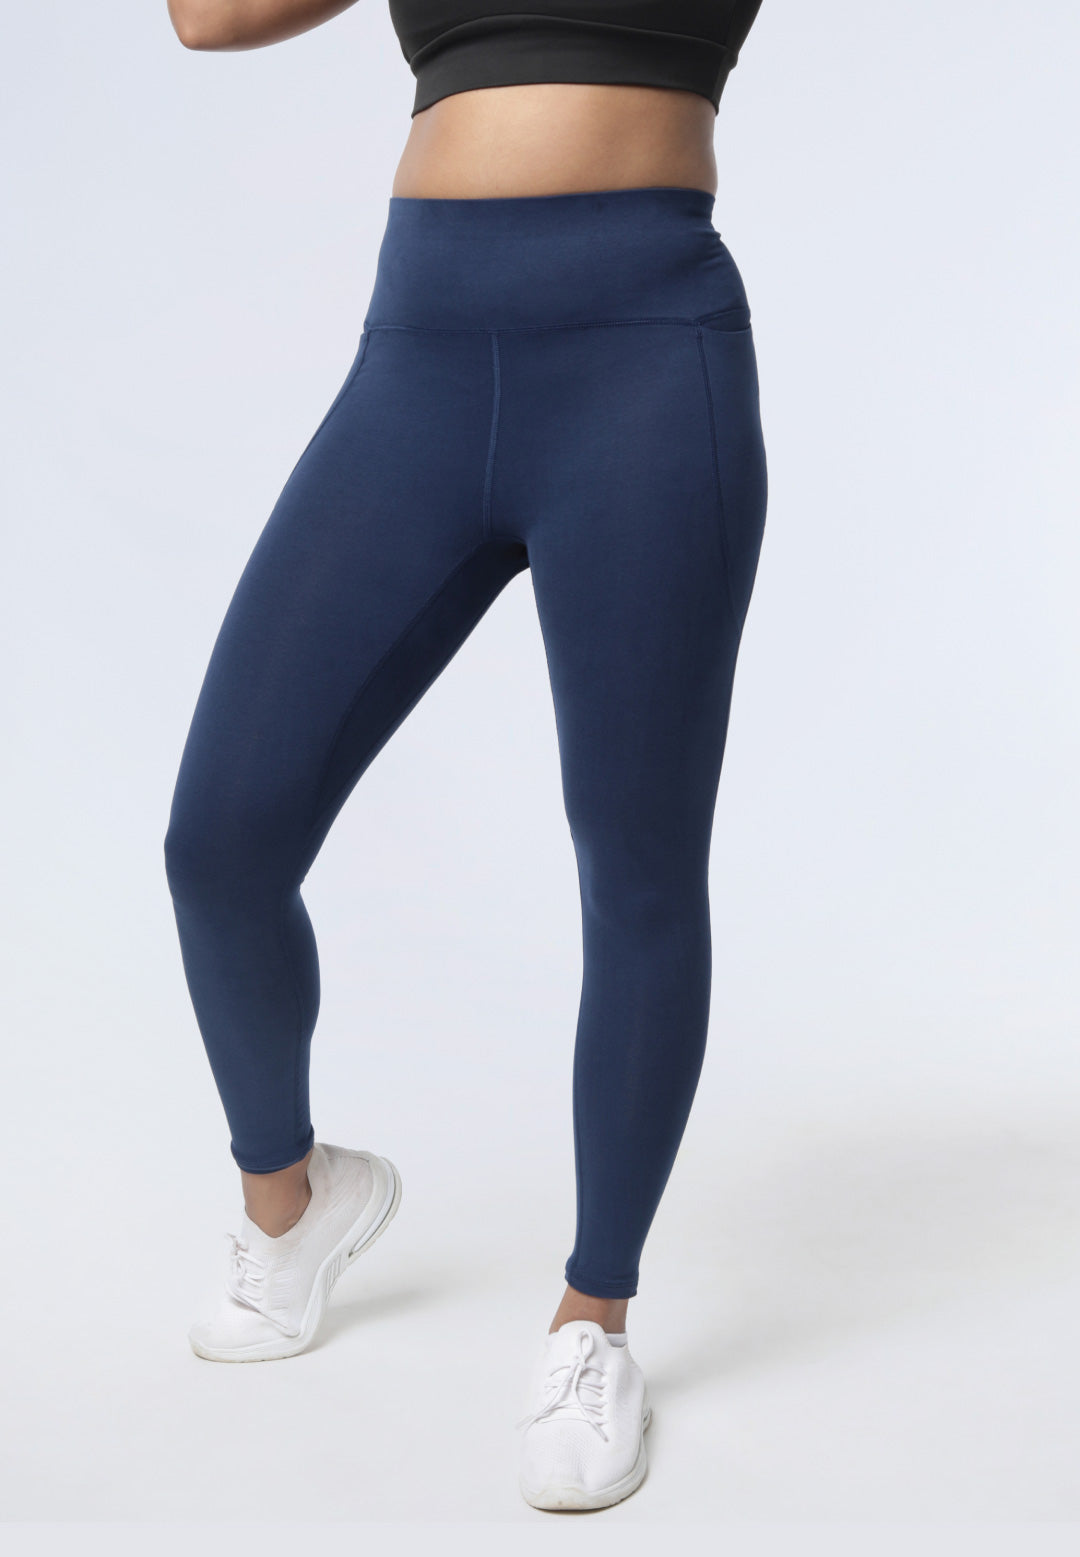 Tentree Inmotion High Rise Legging - Yoga leggings Women's | Buy online |  Bergfreunde.eu